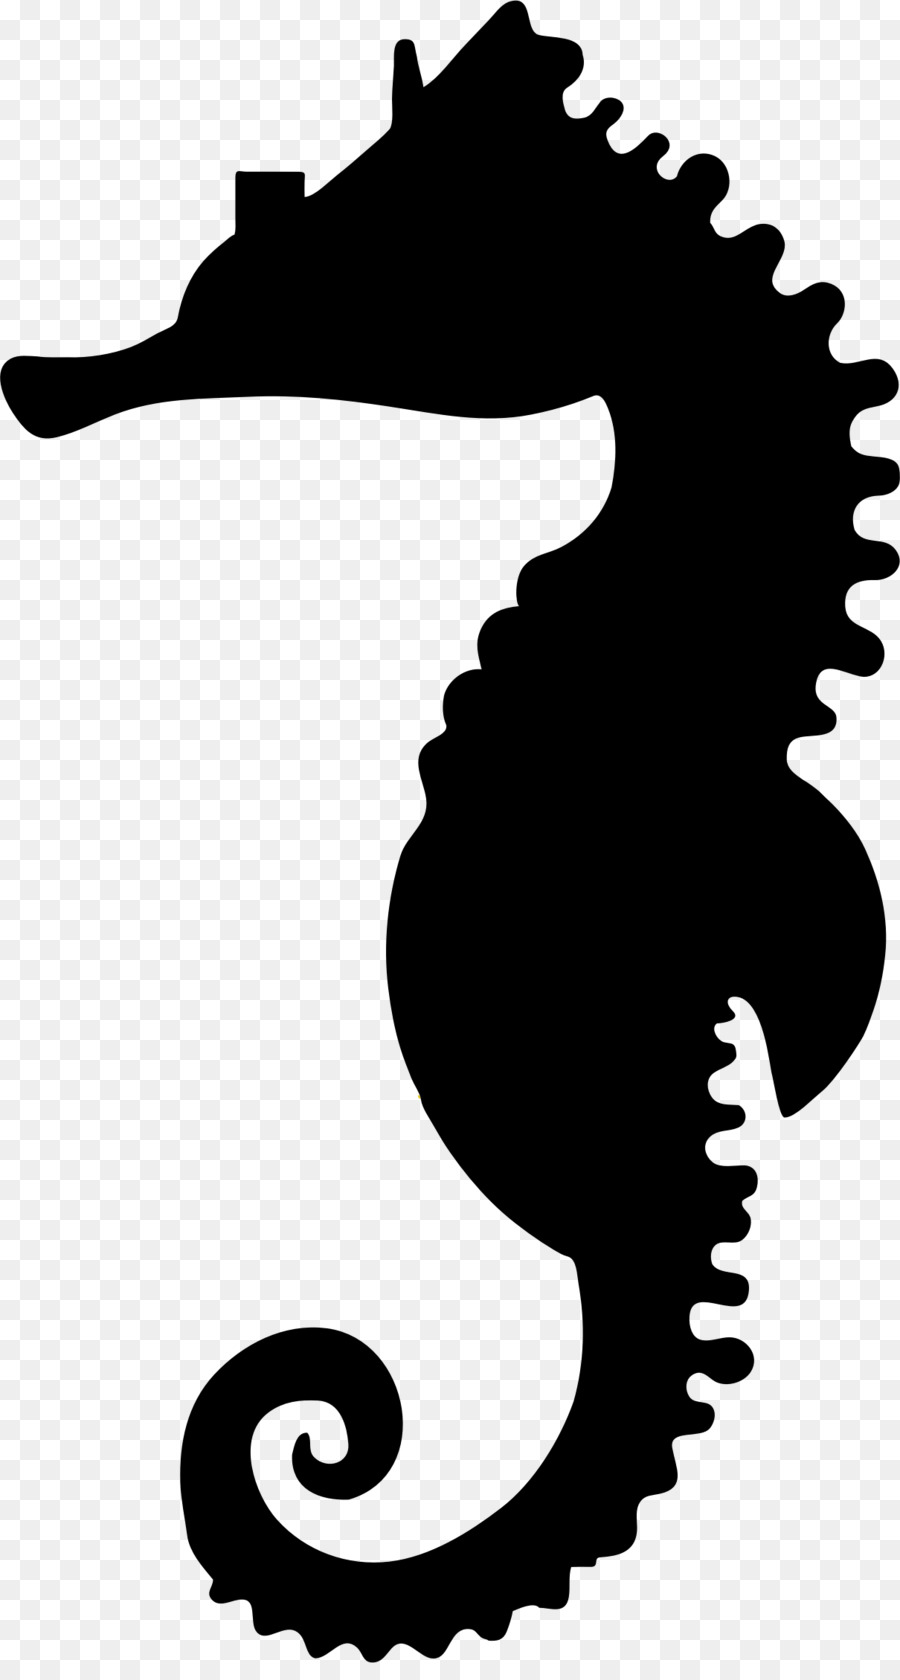 Seahorse Silhouette Clip art - seahorse png download - 1210*2236 - Free Transparent  Seahorse png Download.